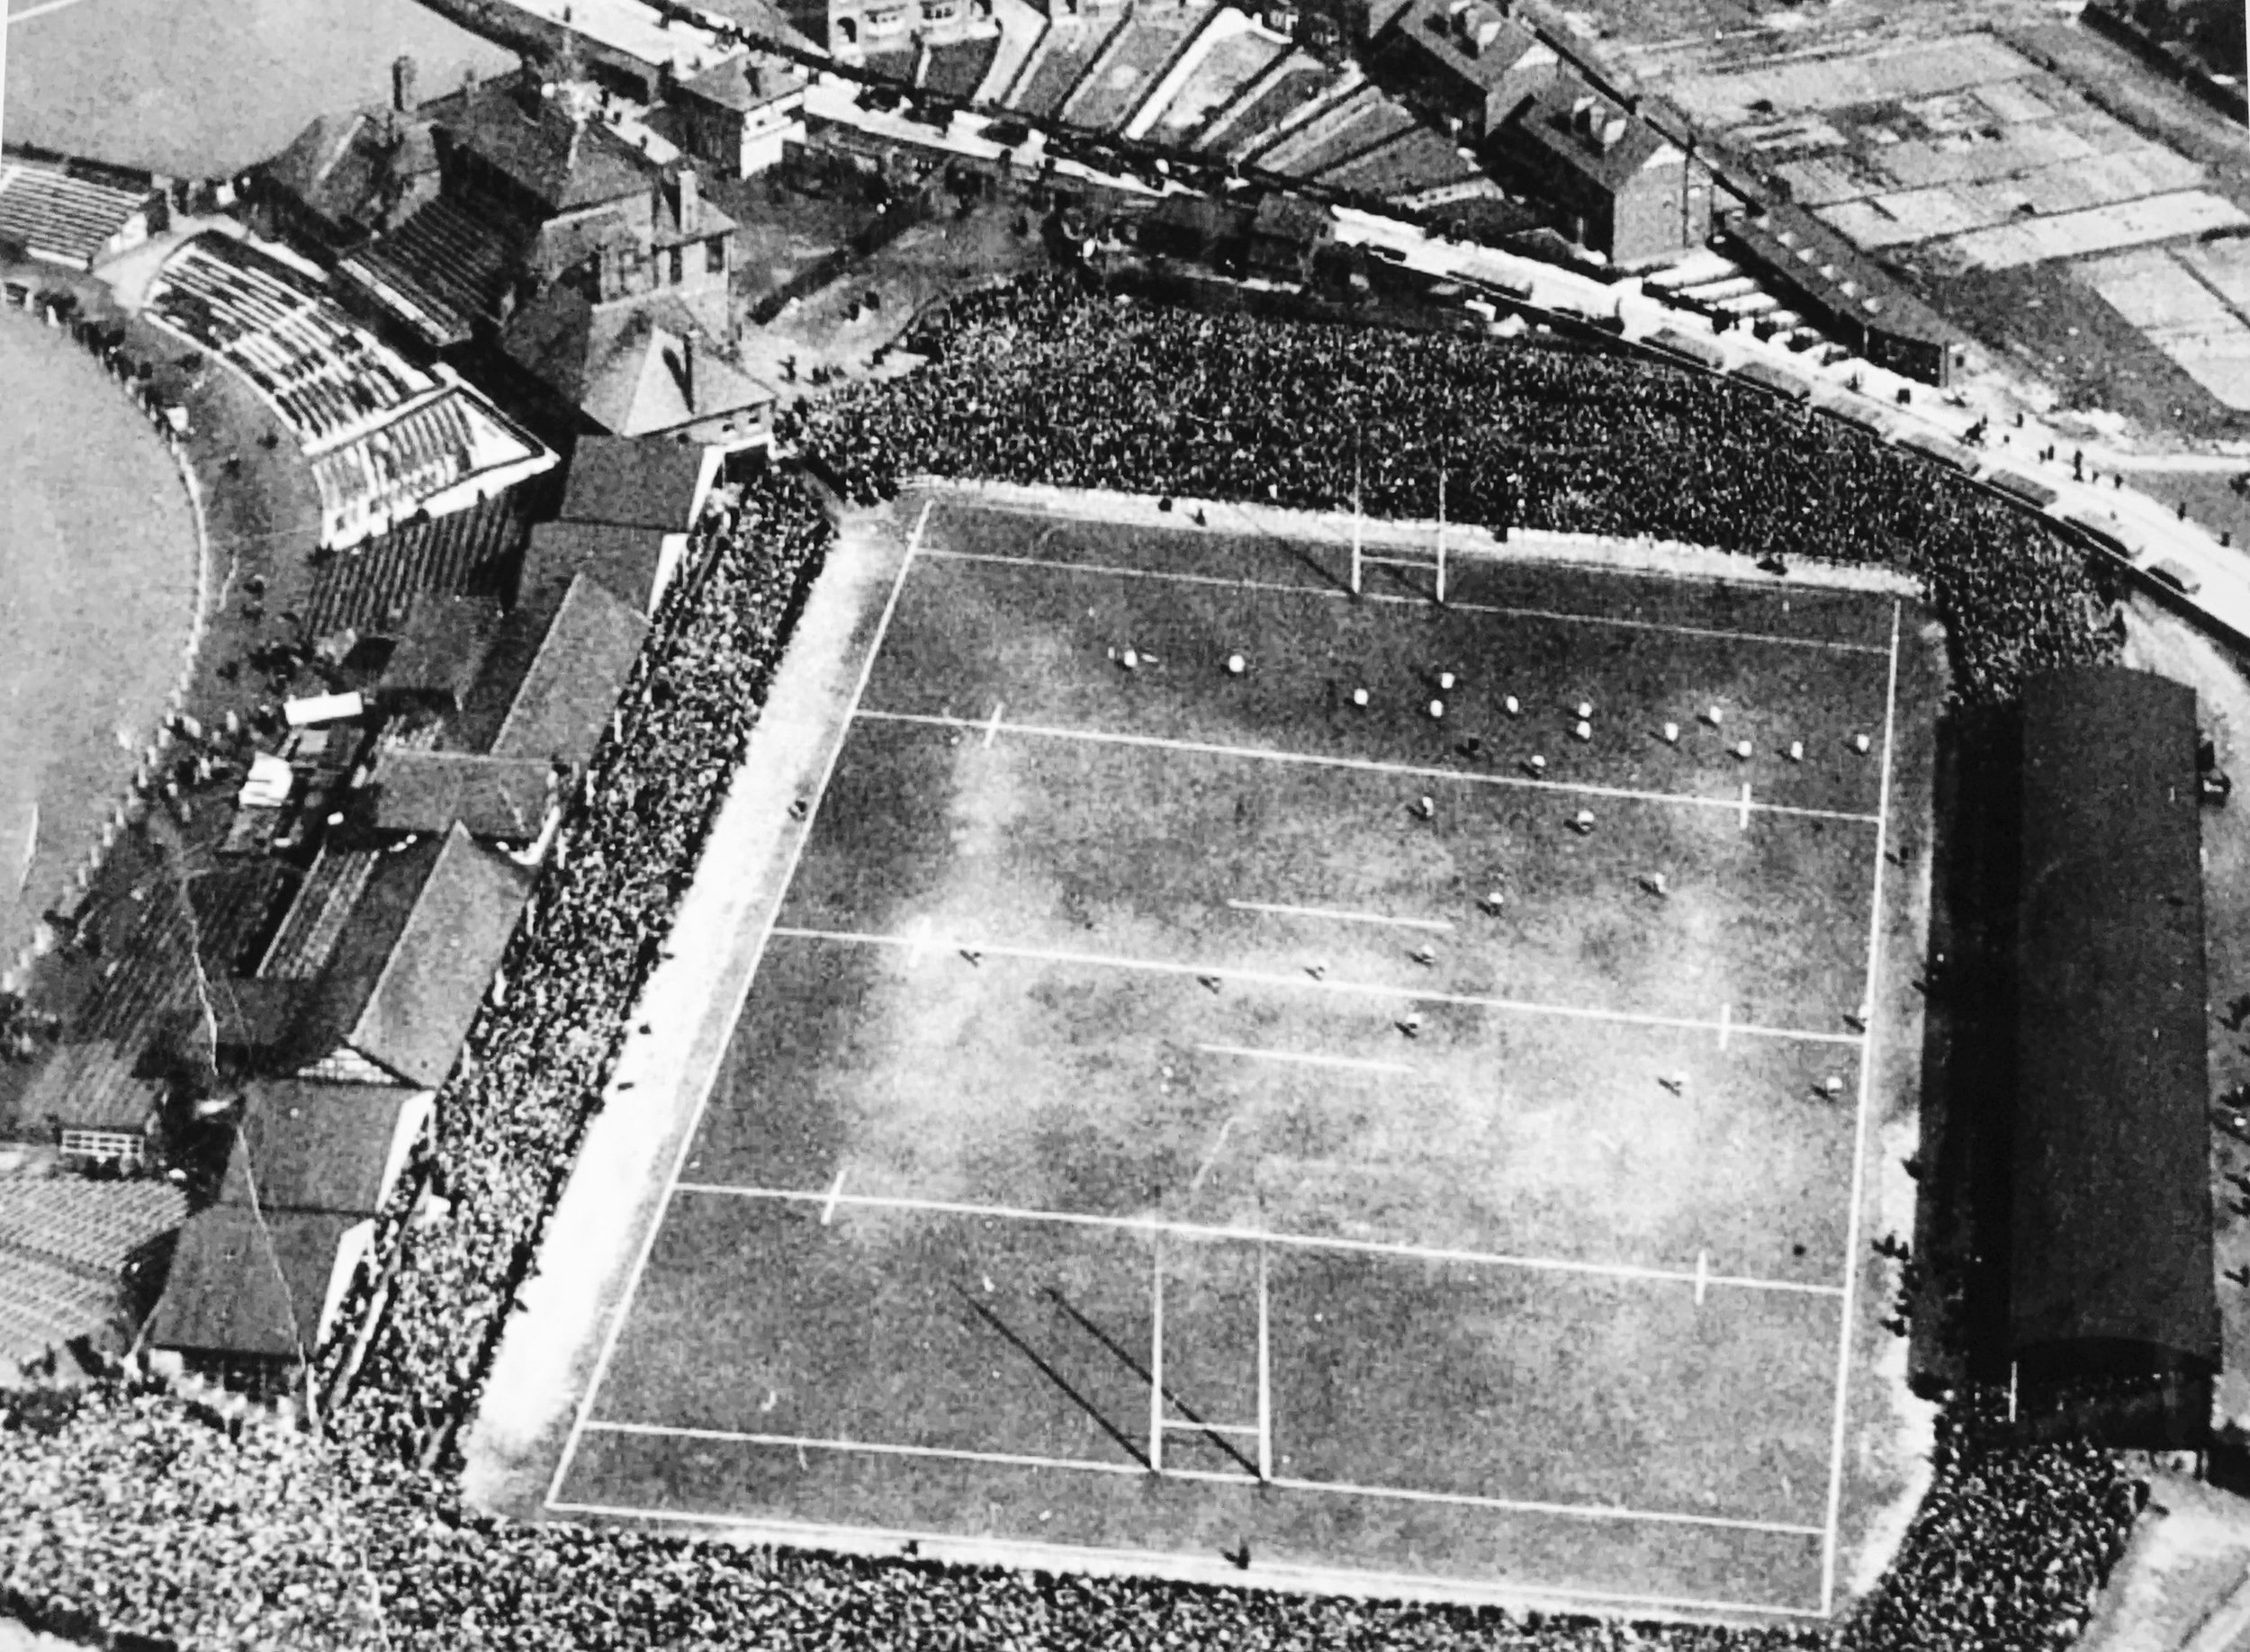 Leeds Rugby Ground, 1925